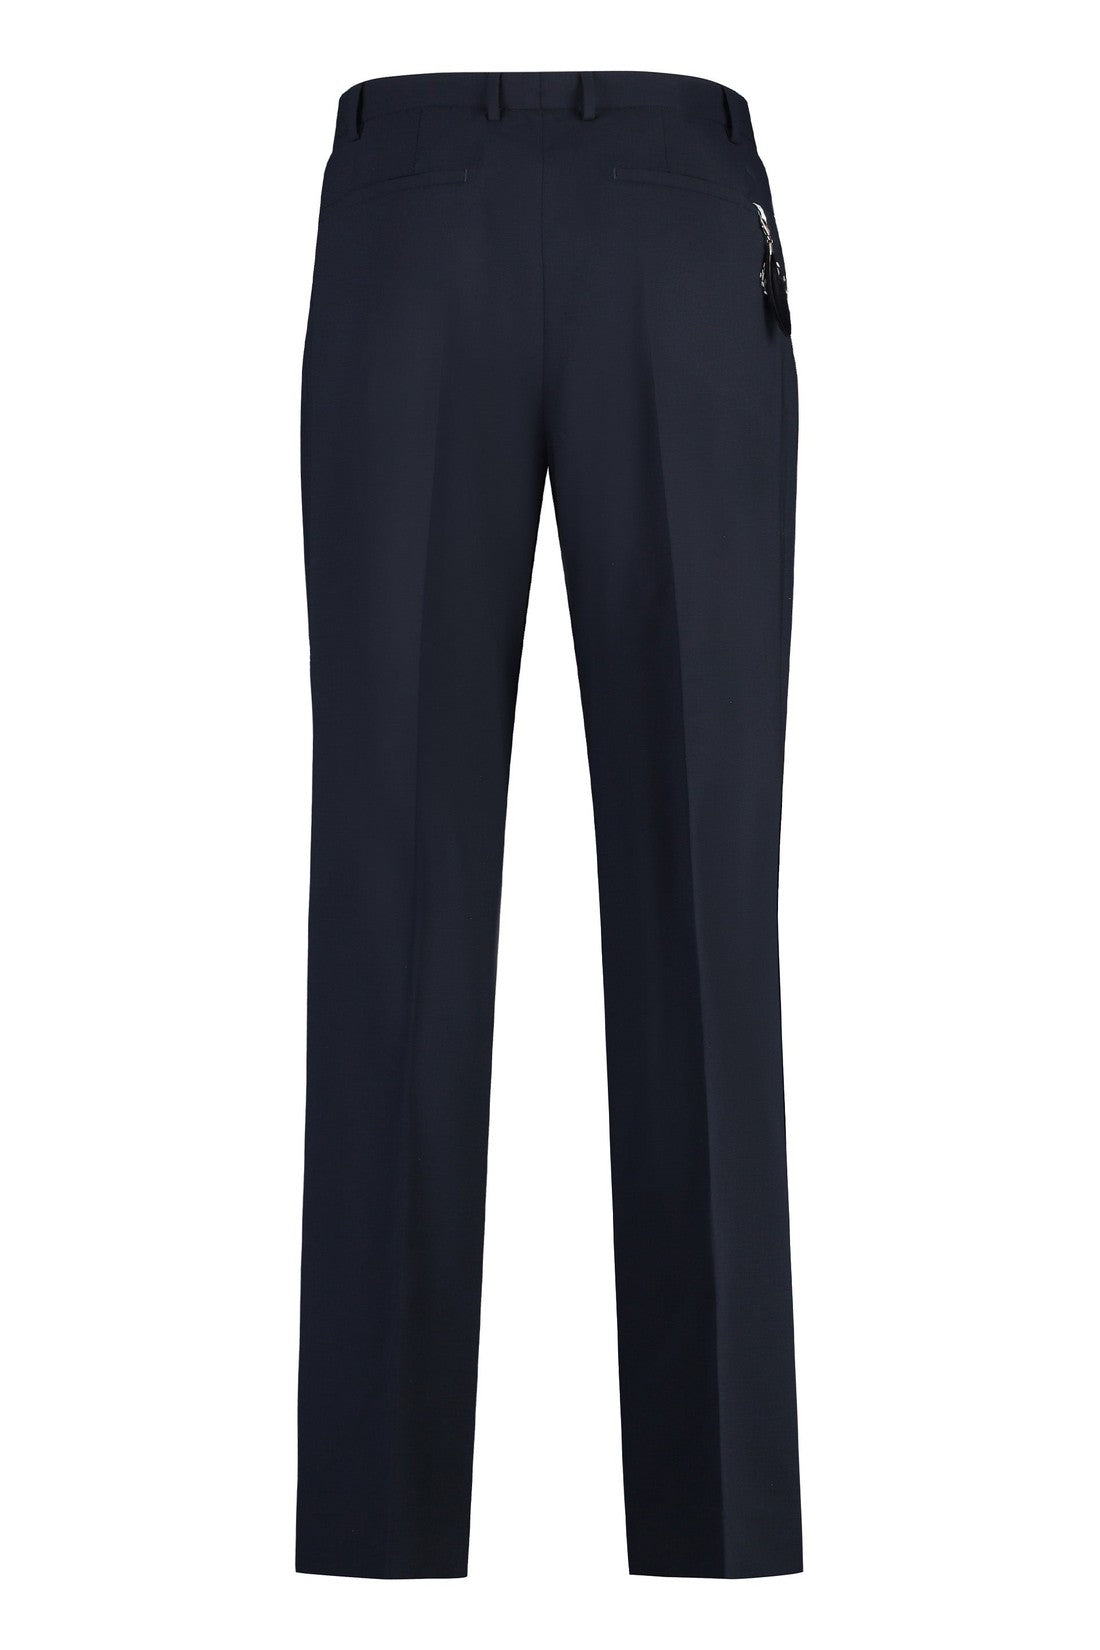 PT01 Pantaloni Torino-OUTLET-SALE-Wool blend trousers-ARCHIVIST